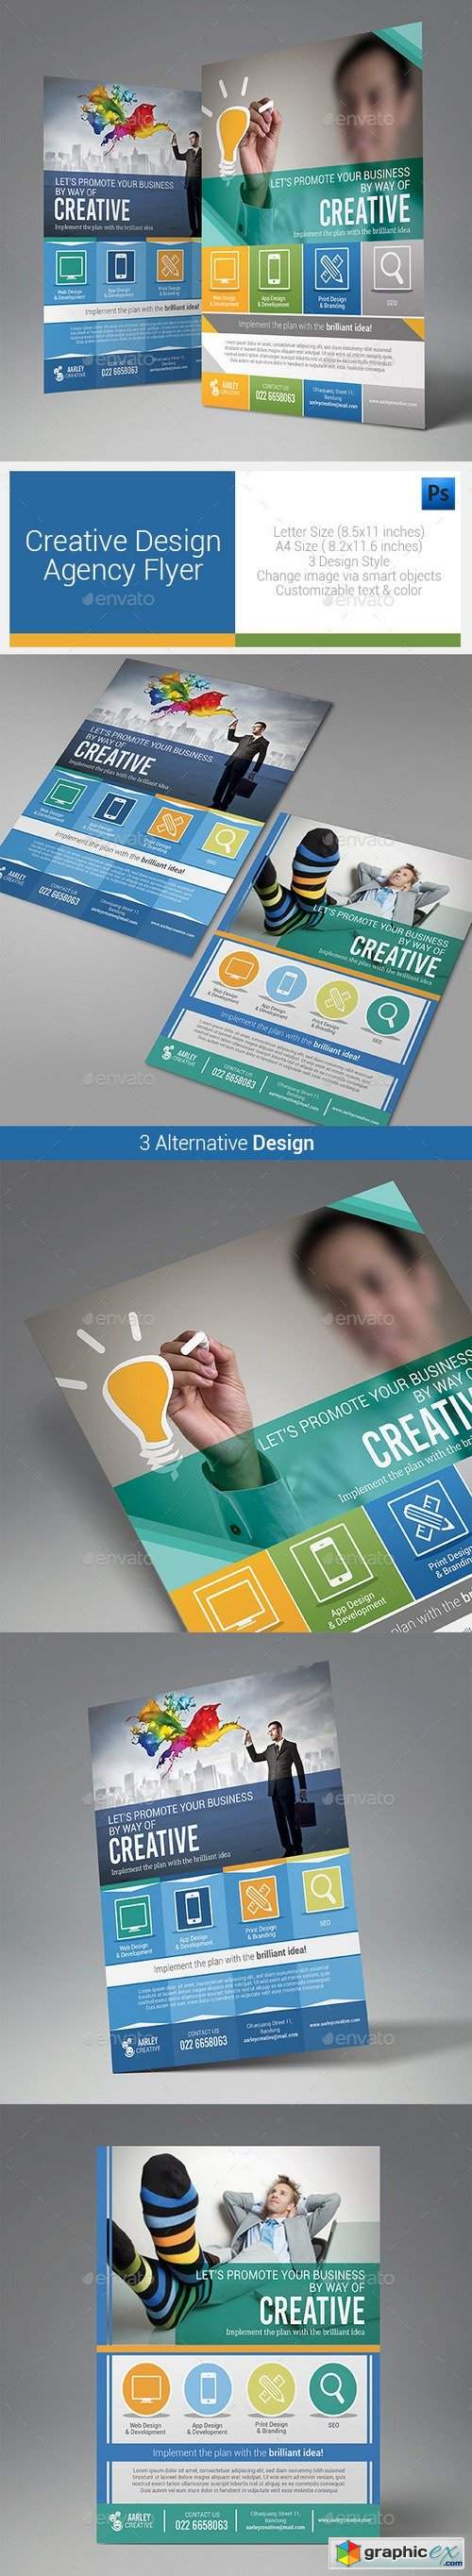 Creative Design Agency Flyers 10147959